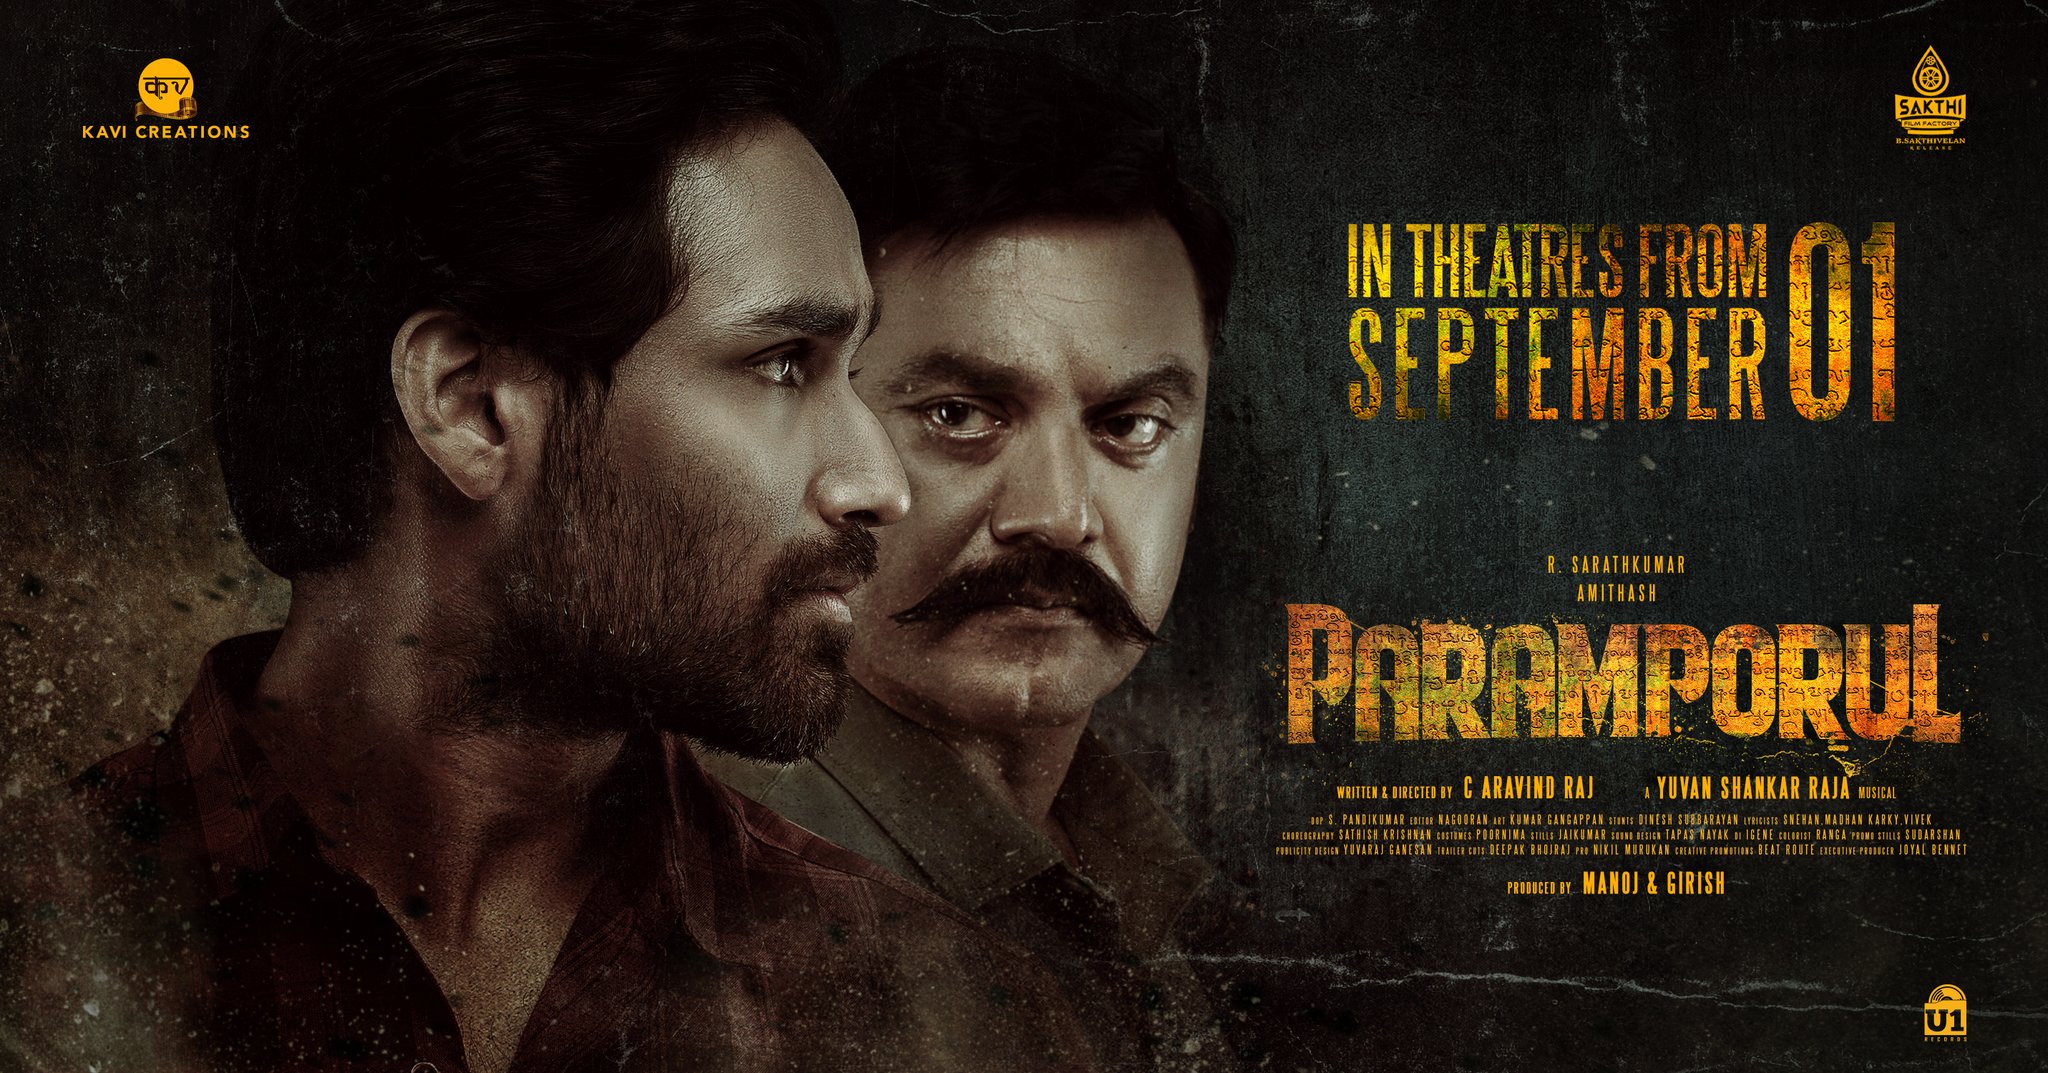 Paramporul releasing Sep 7th | Sarathkumar 